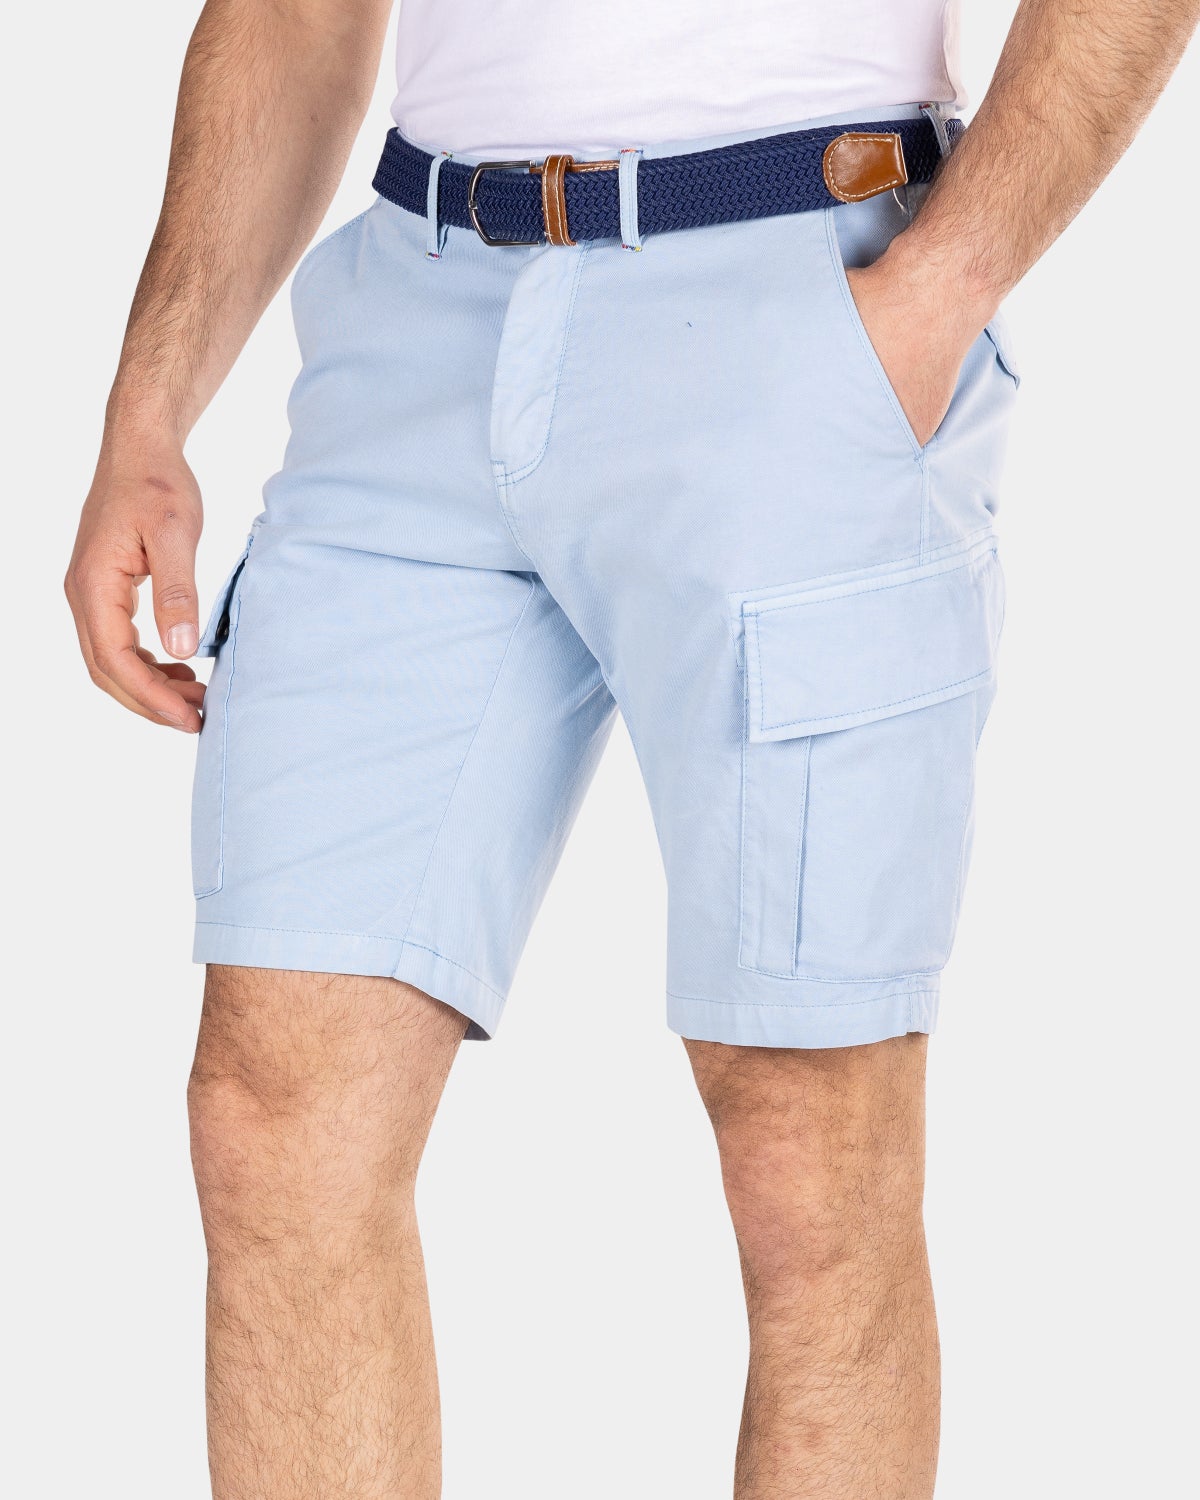 Plain shorts - Universal Blue